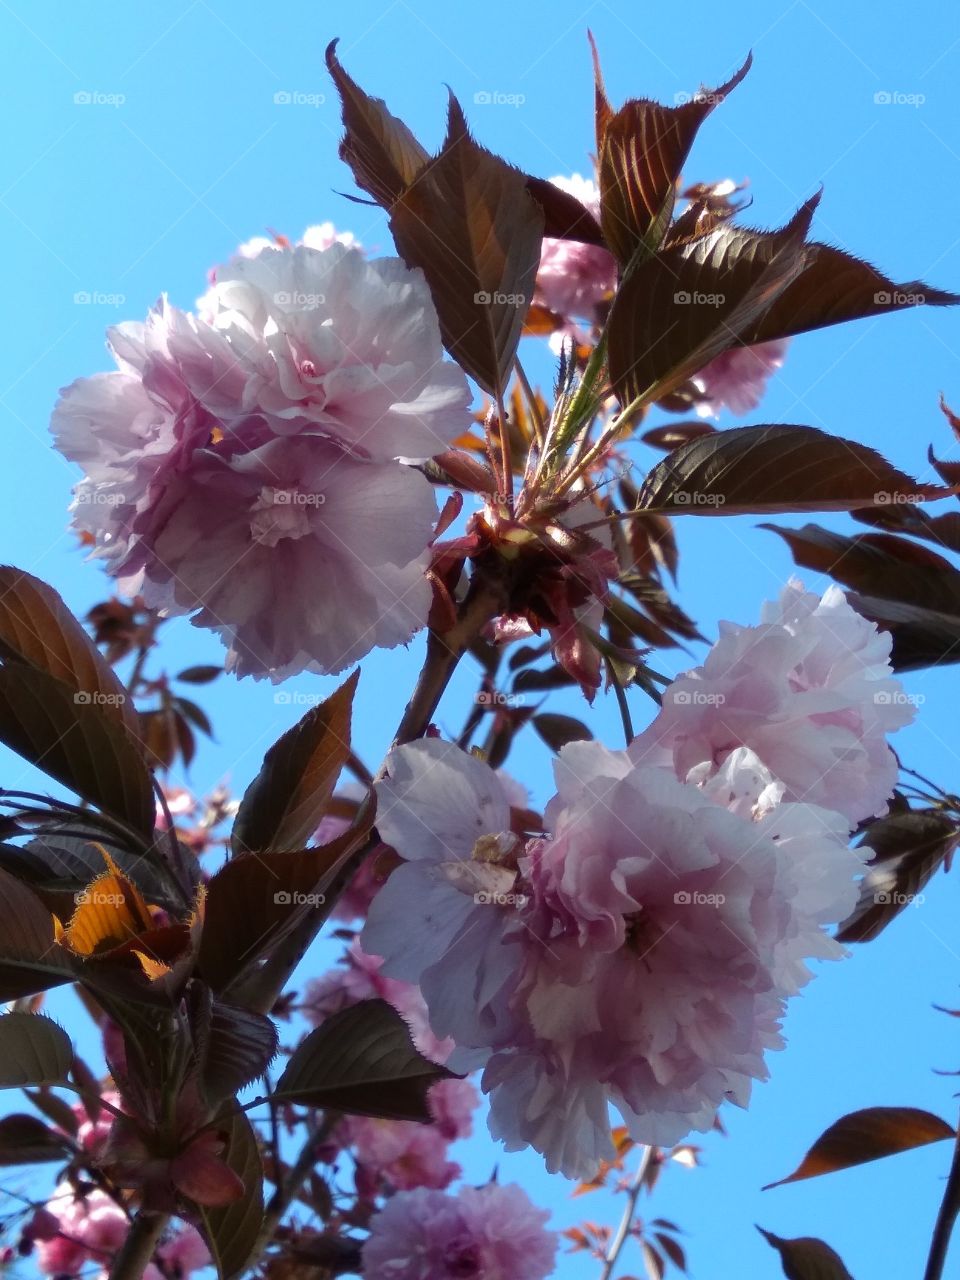 Весеннее цветение деревьев - чудо природы. Ясным днём в Крыму.
Spring flowering of trees is a miracle of nature. A clear day in the Crimea.